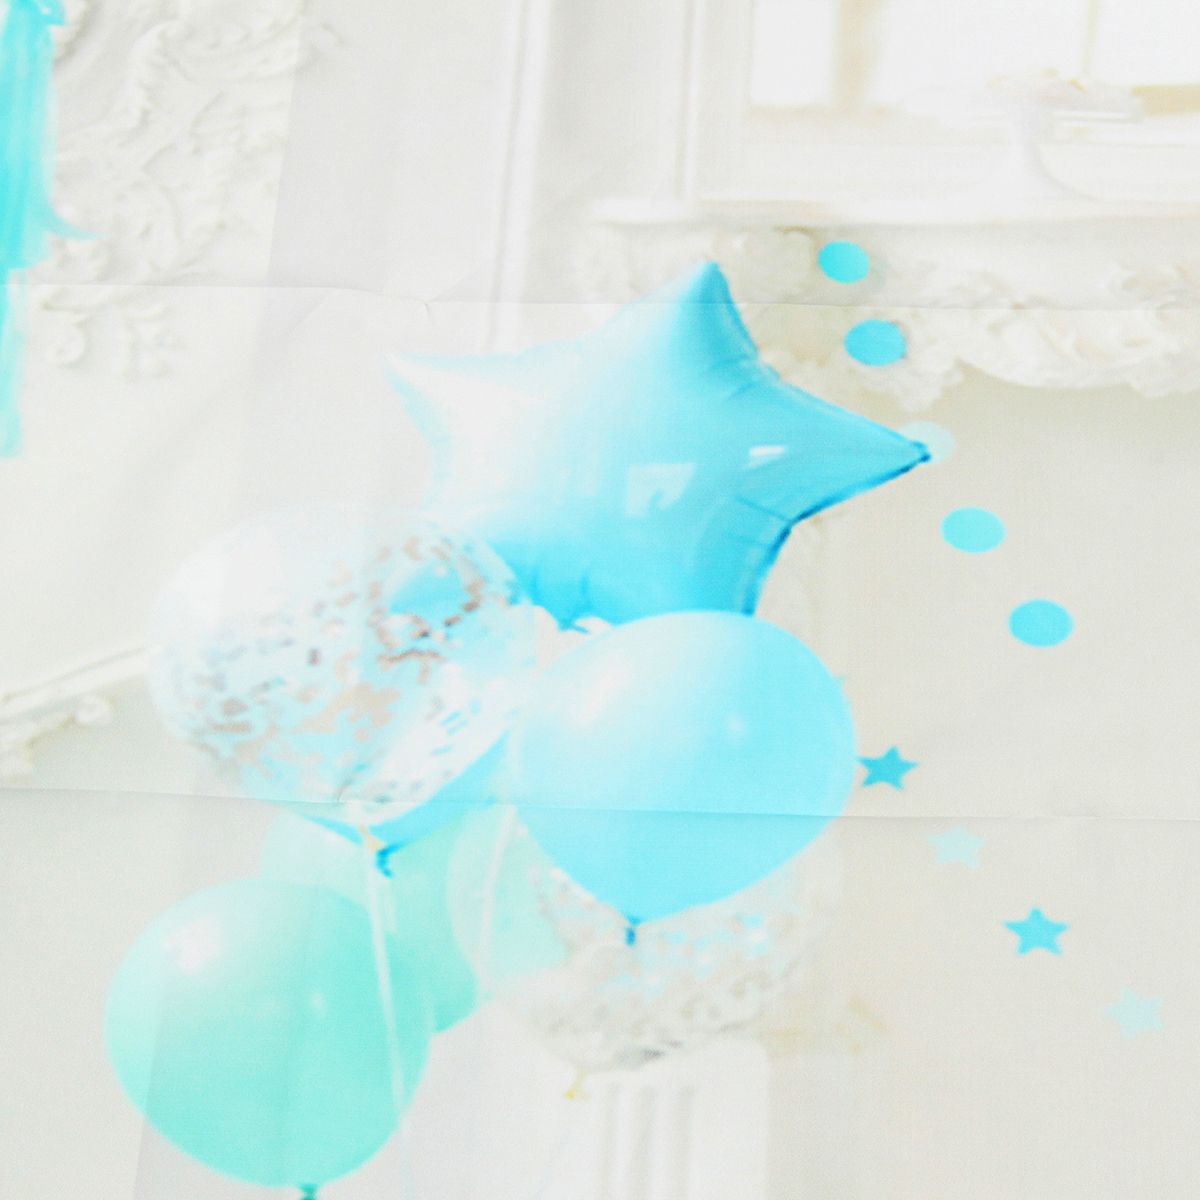 5x7FT-White-Room-Blue-Balloon-Birthday-Theme-Photography-Backdrop-Studio-Prop-Background-1402322